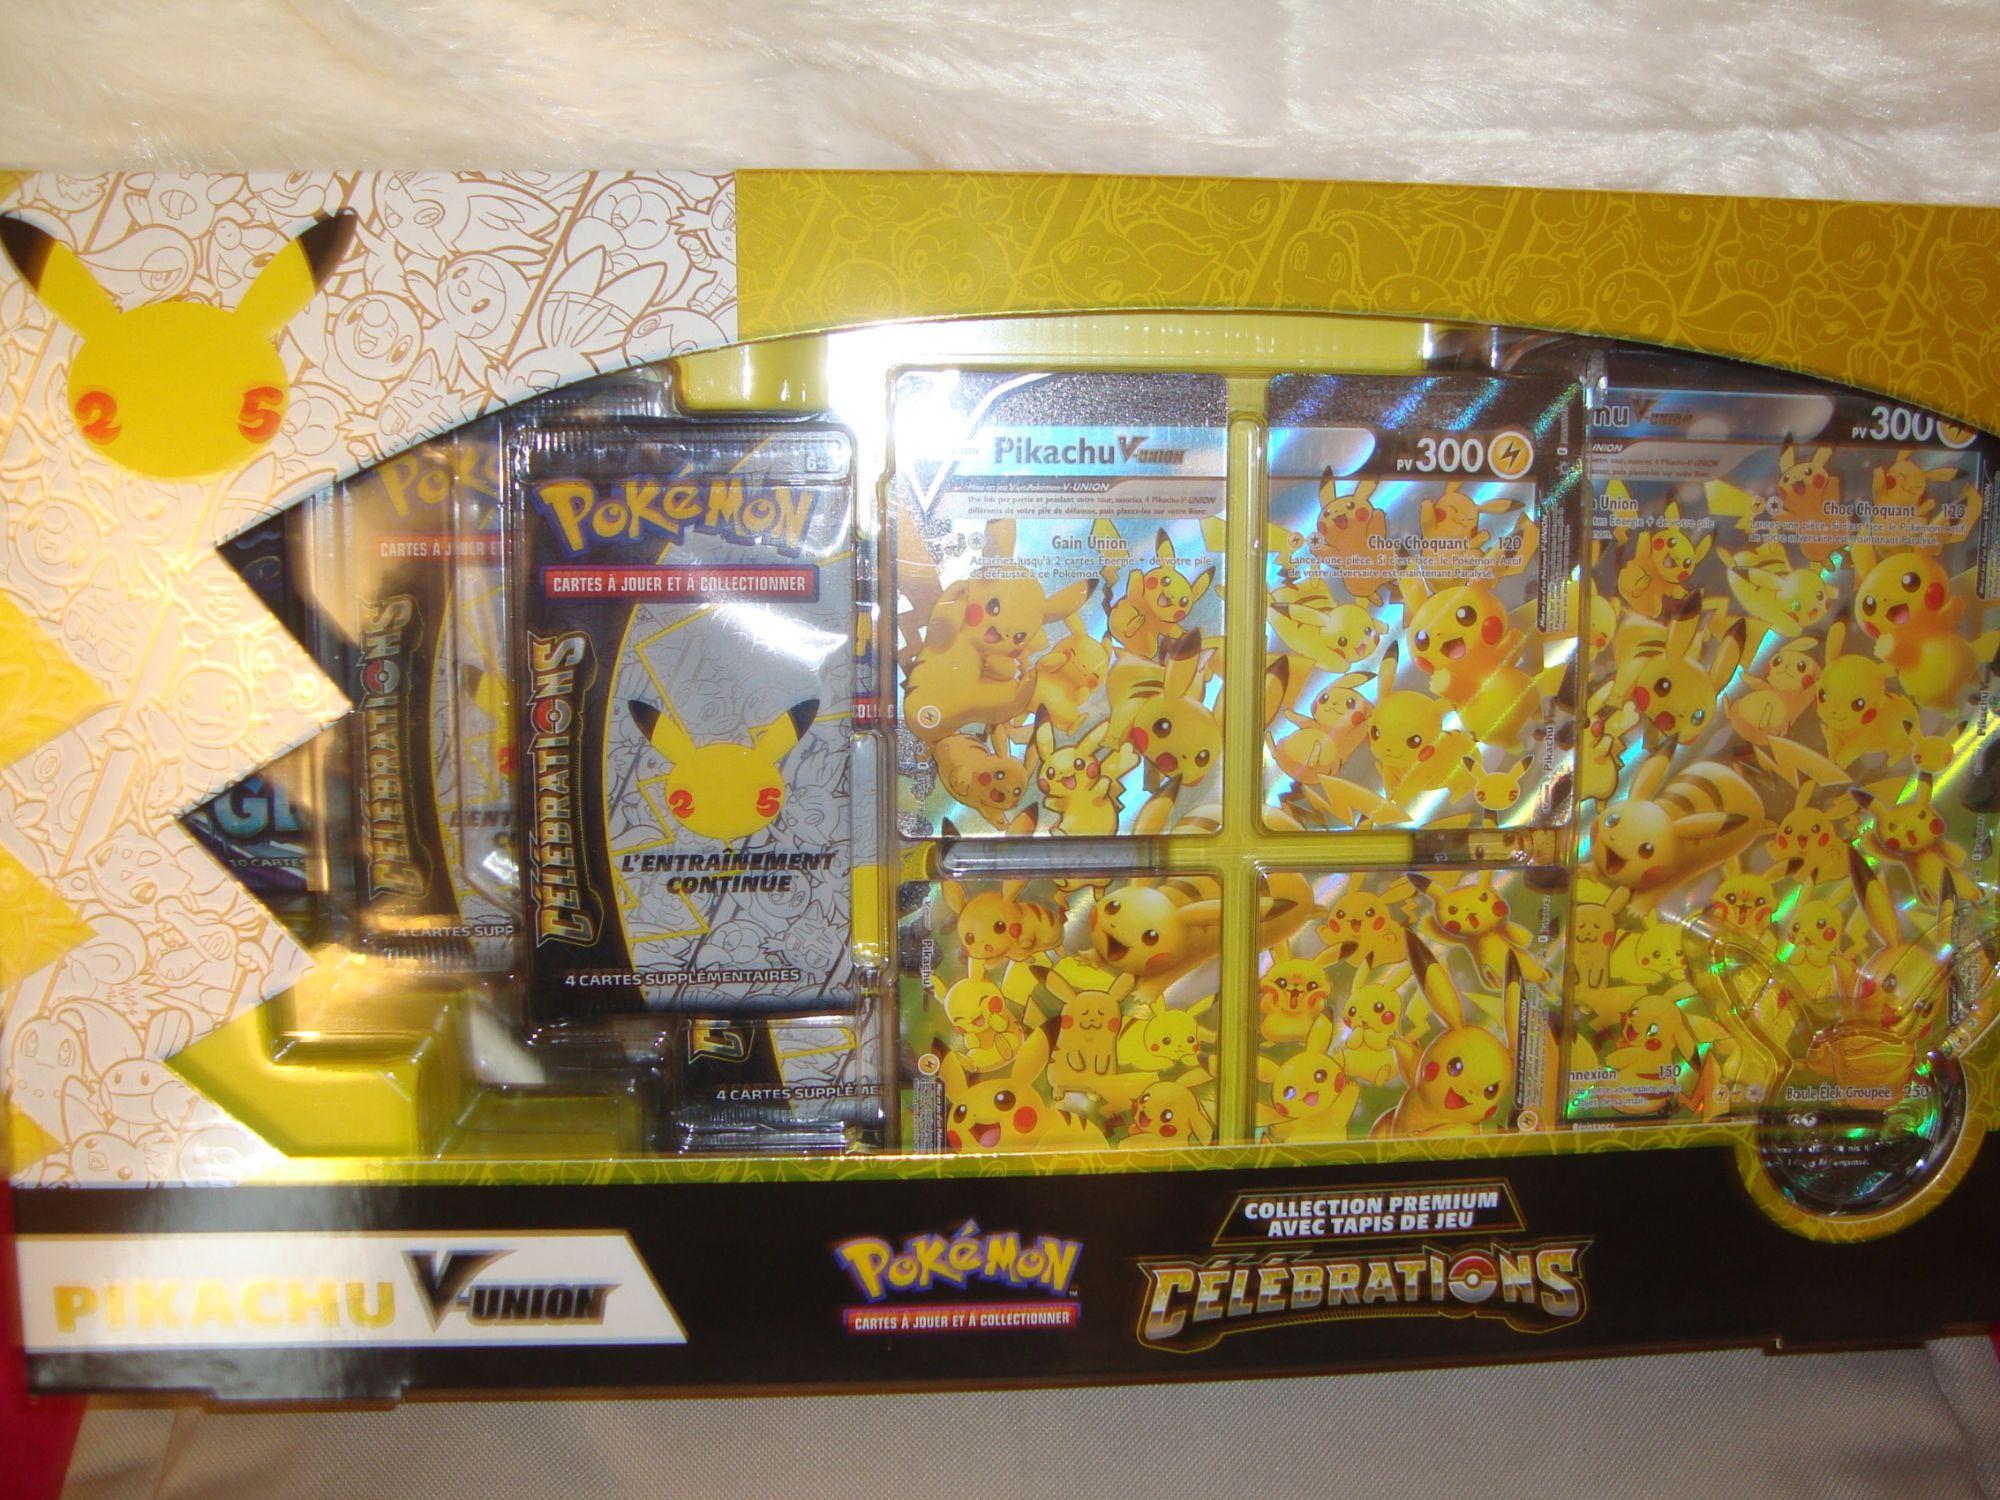 Promo Coffret Pikachu V-union 25 Ans Asmodee chez E.Leclerc